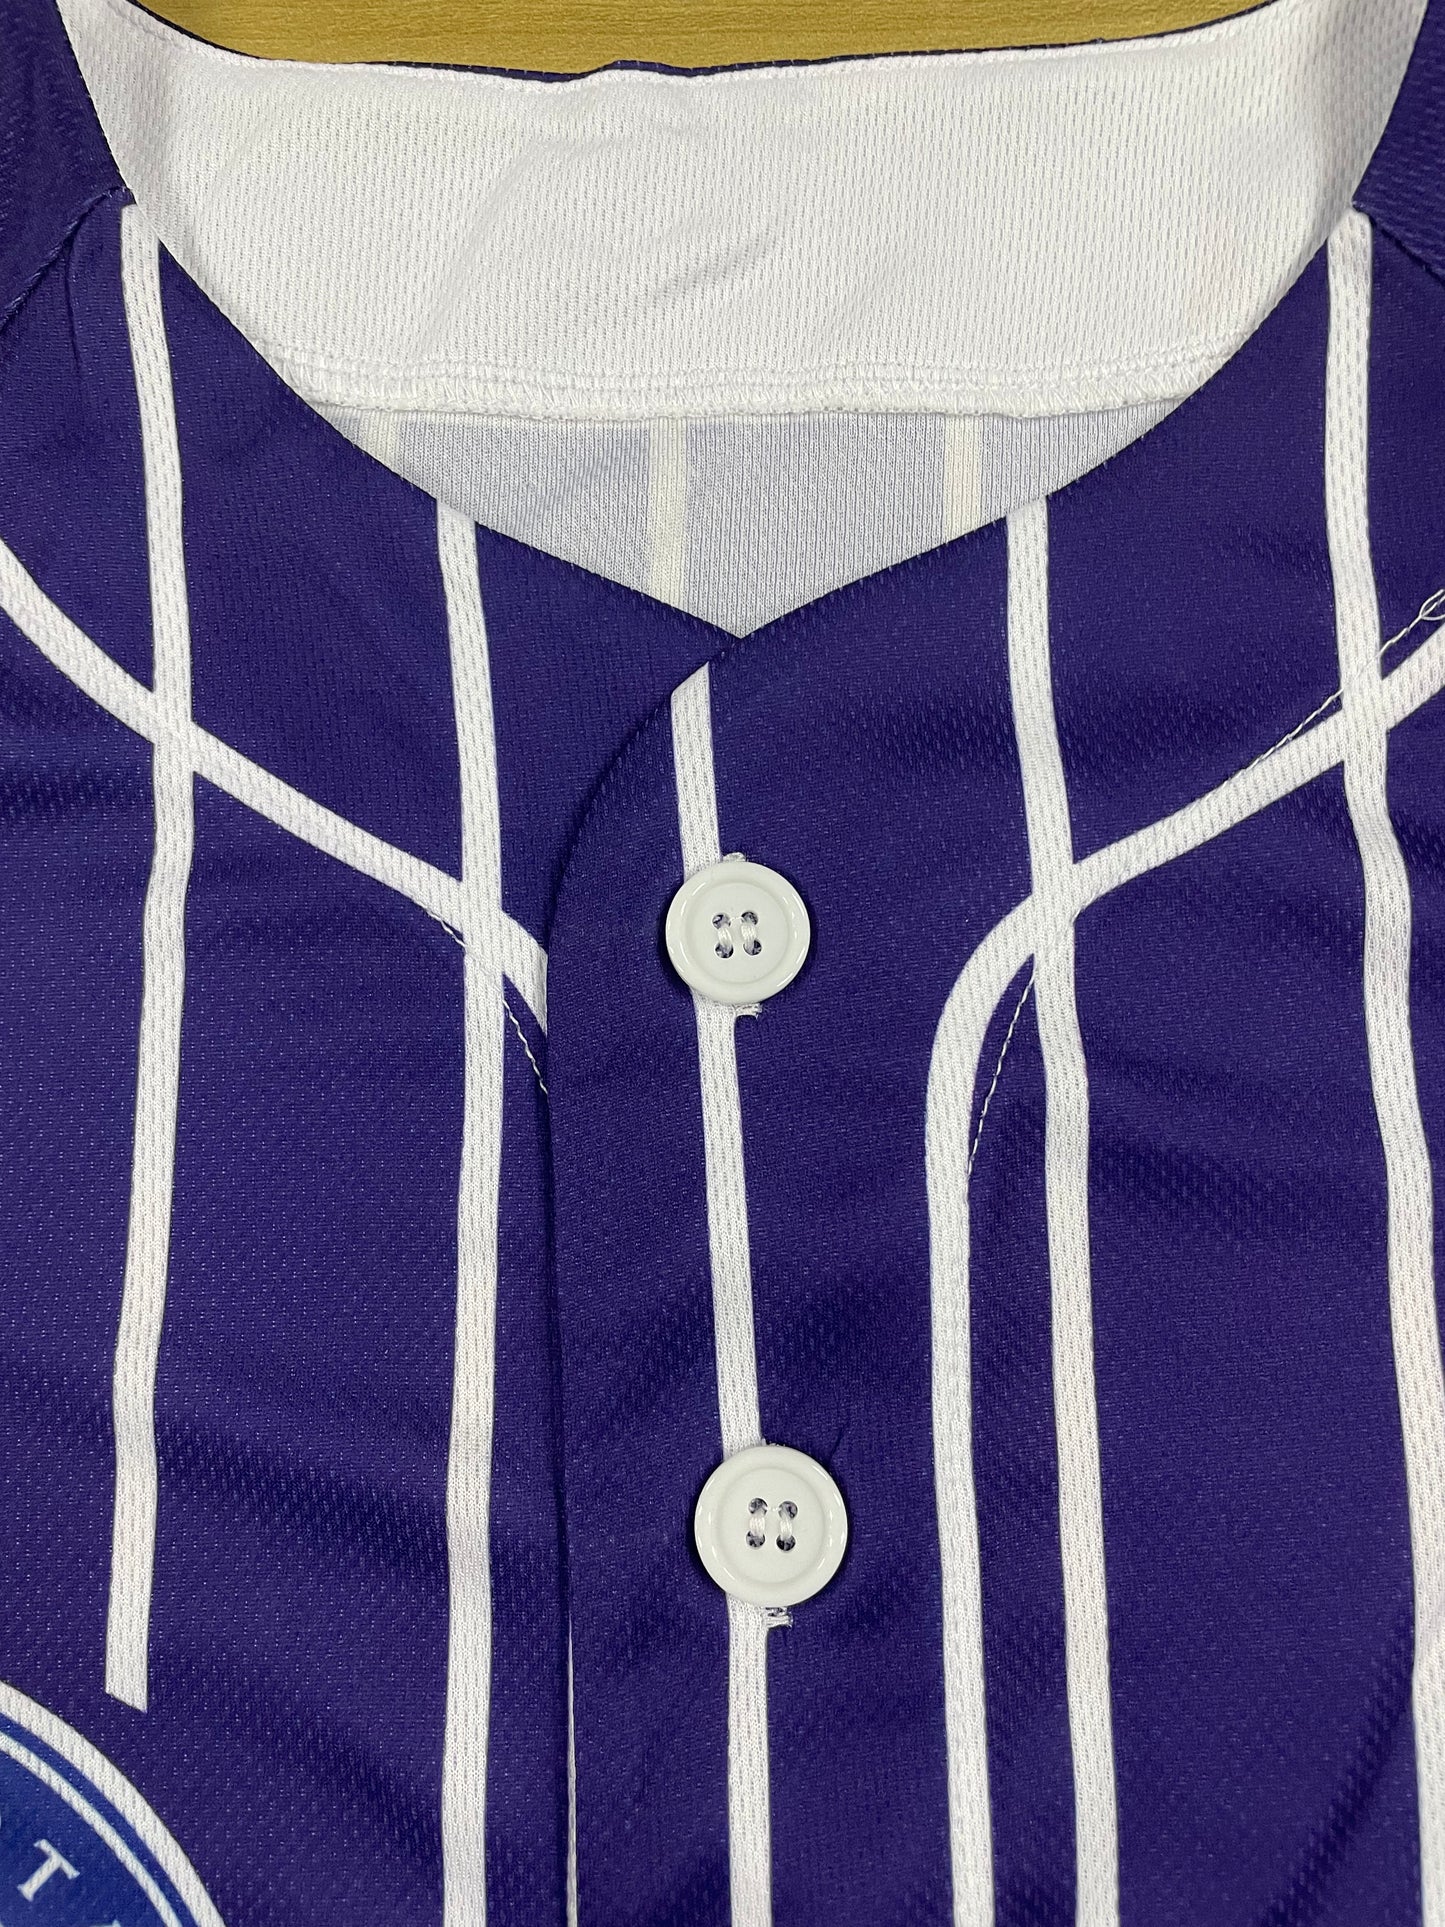 Custom Full Subliamtion Full Button Baseball Jersey